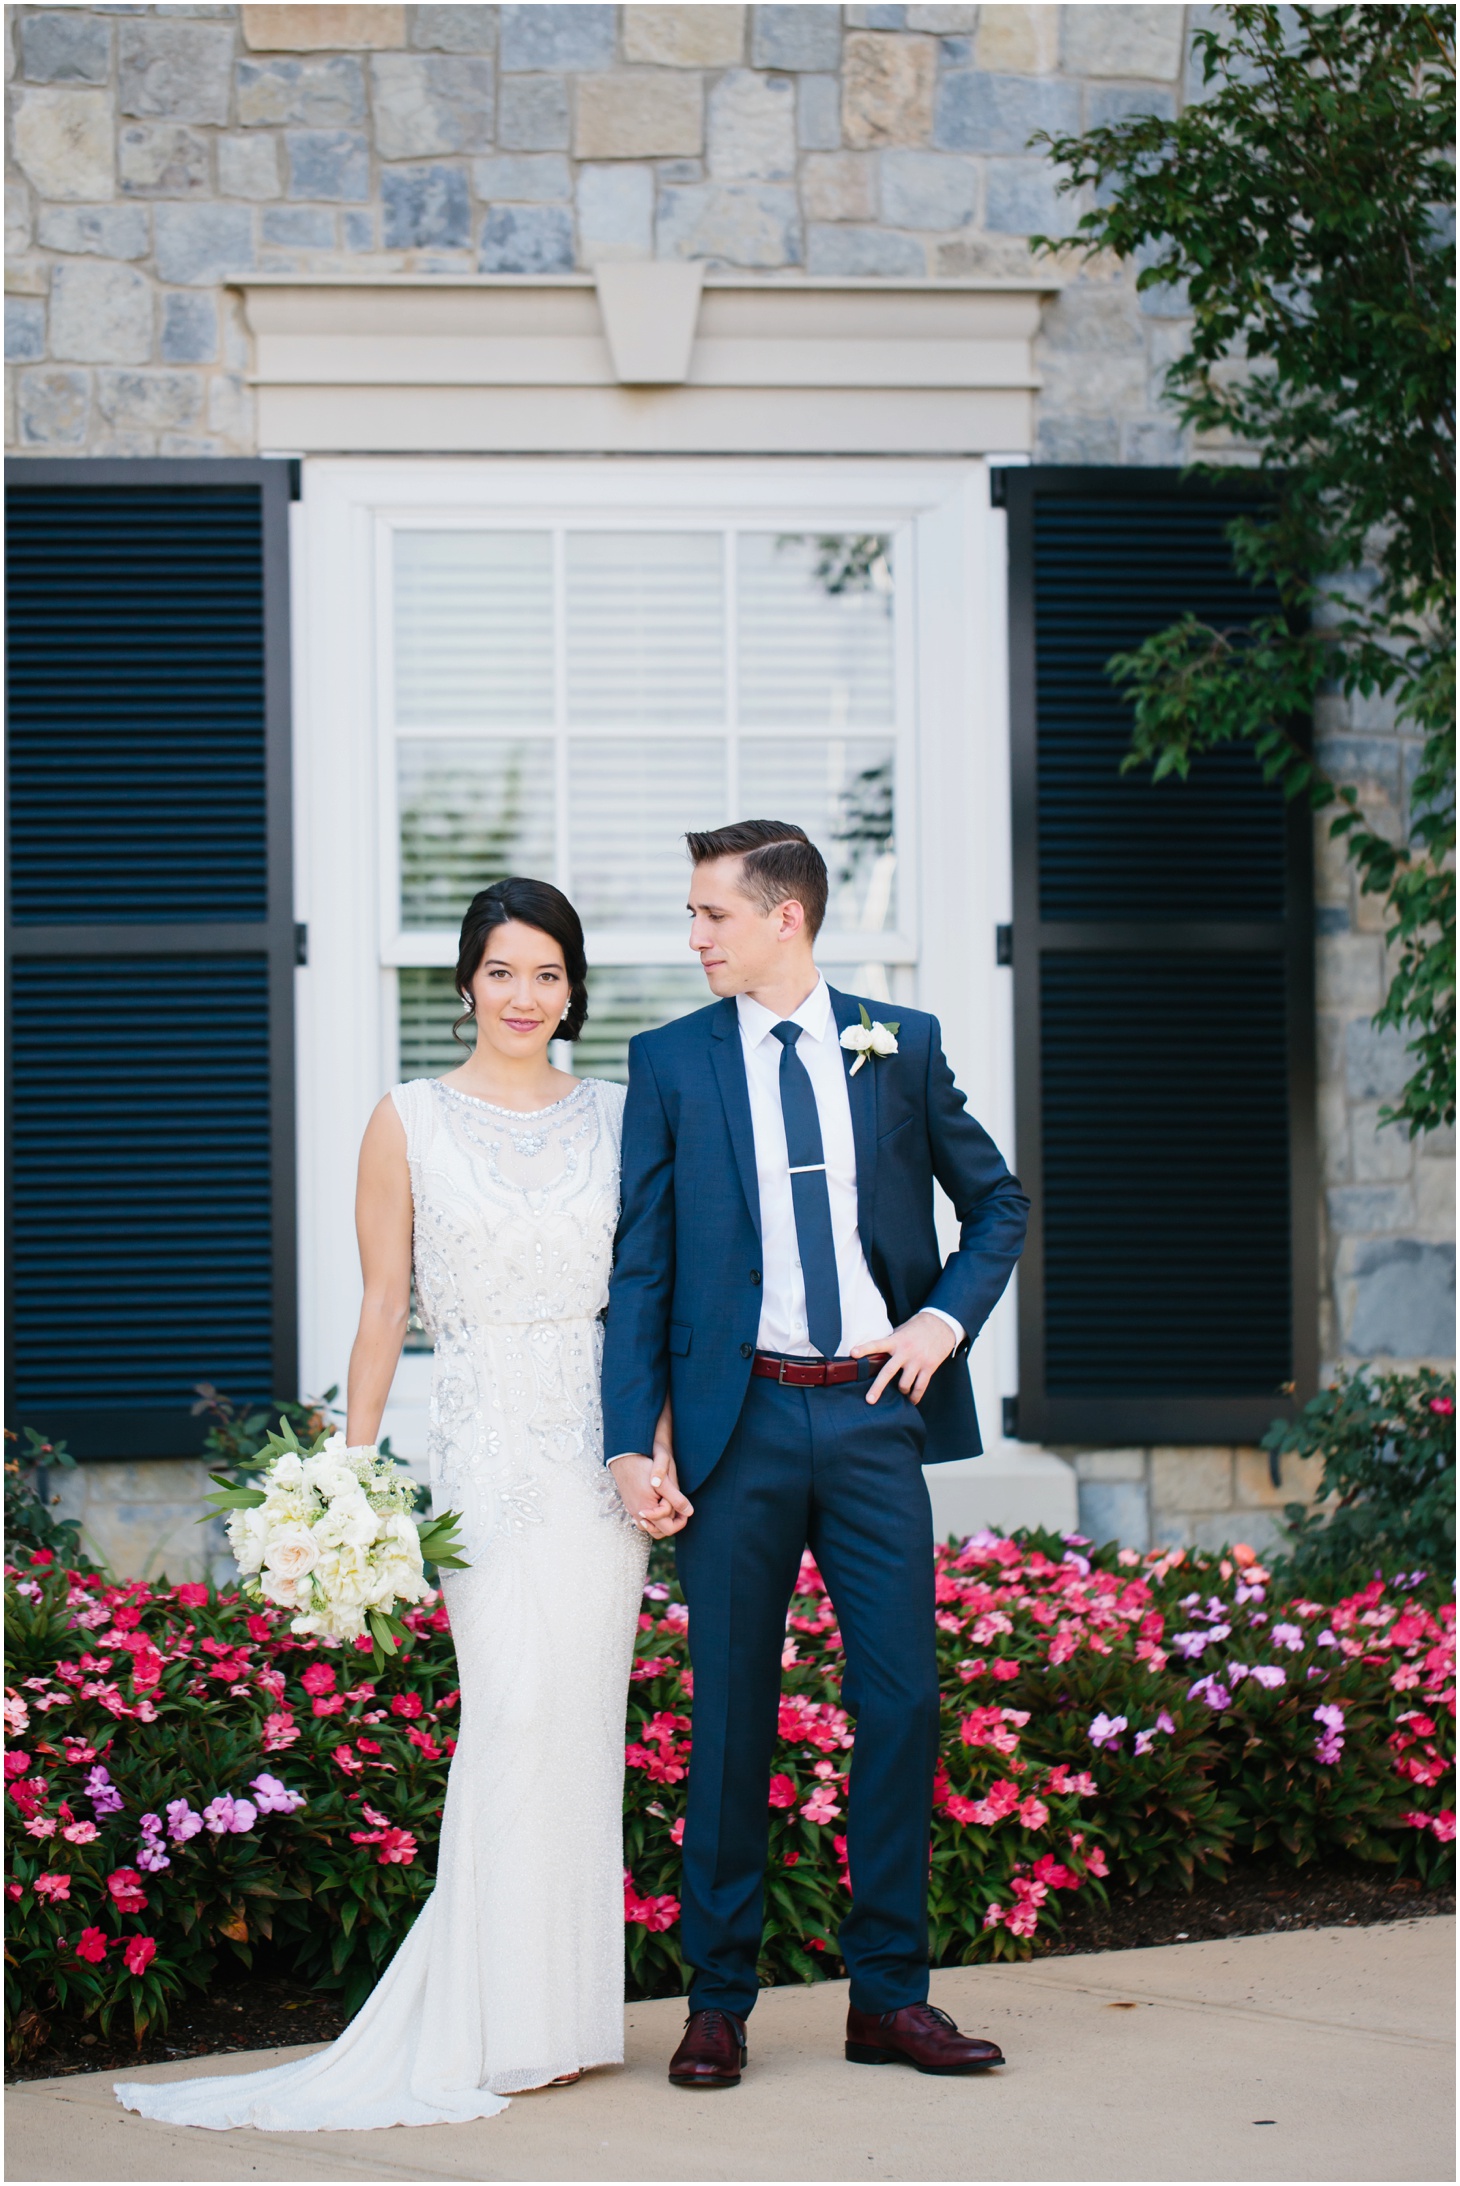 Raspberry & Navy Wedding at Army Navy Country Club by Sarah Bradshaw Photography_0021.jpg